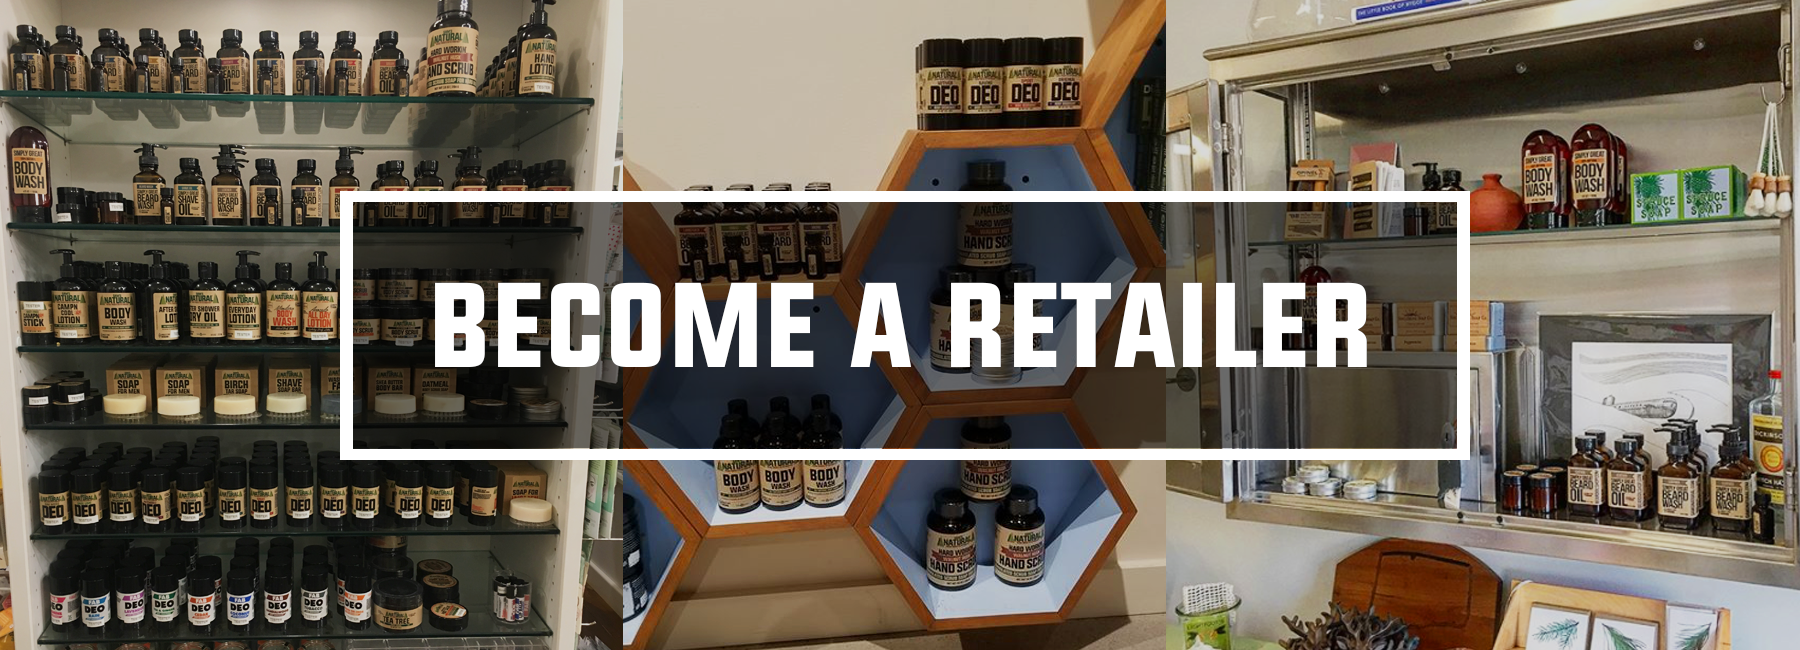 Become a retailer of Sam's Natural